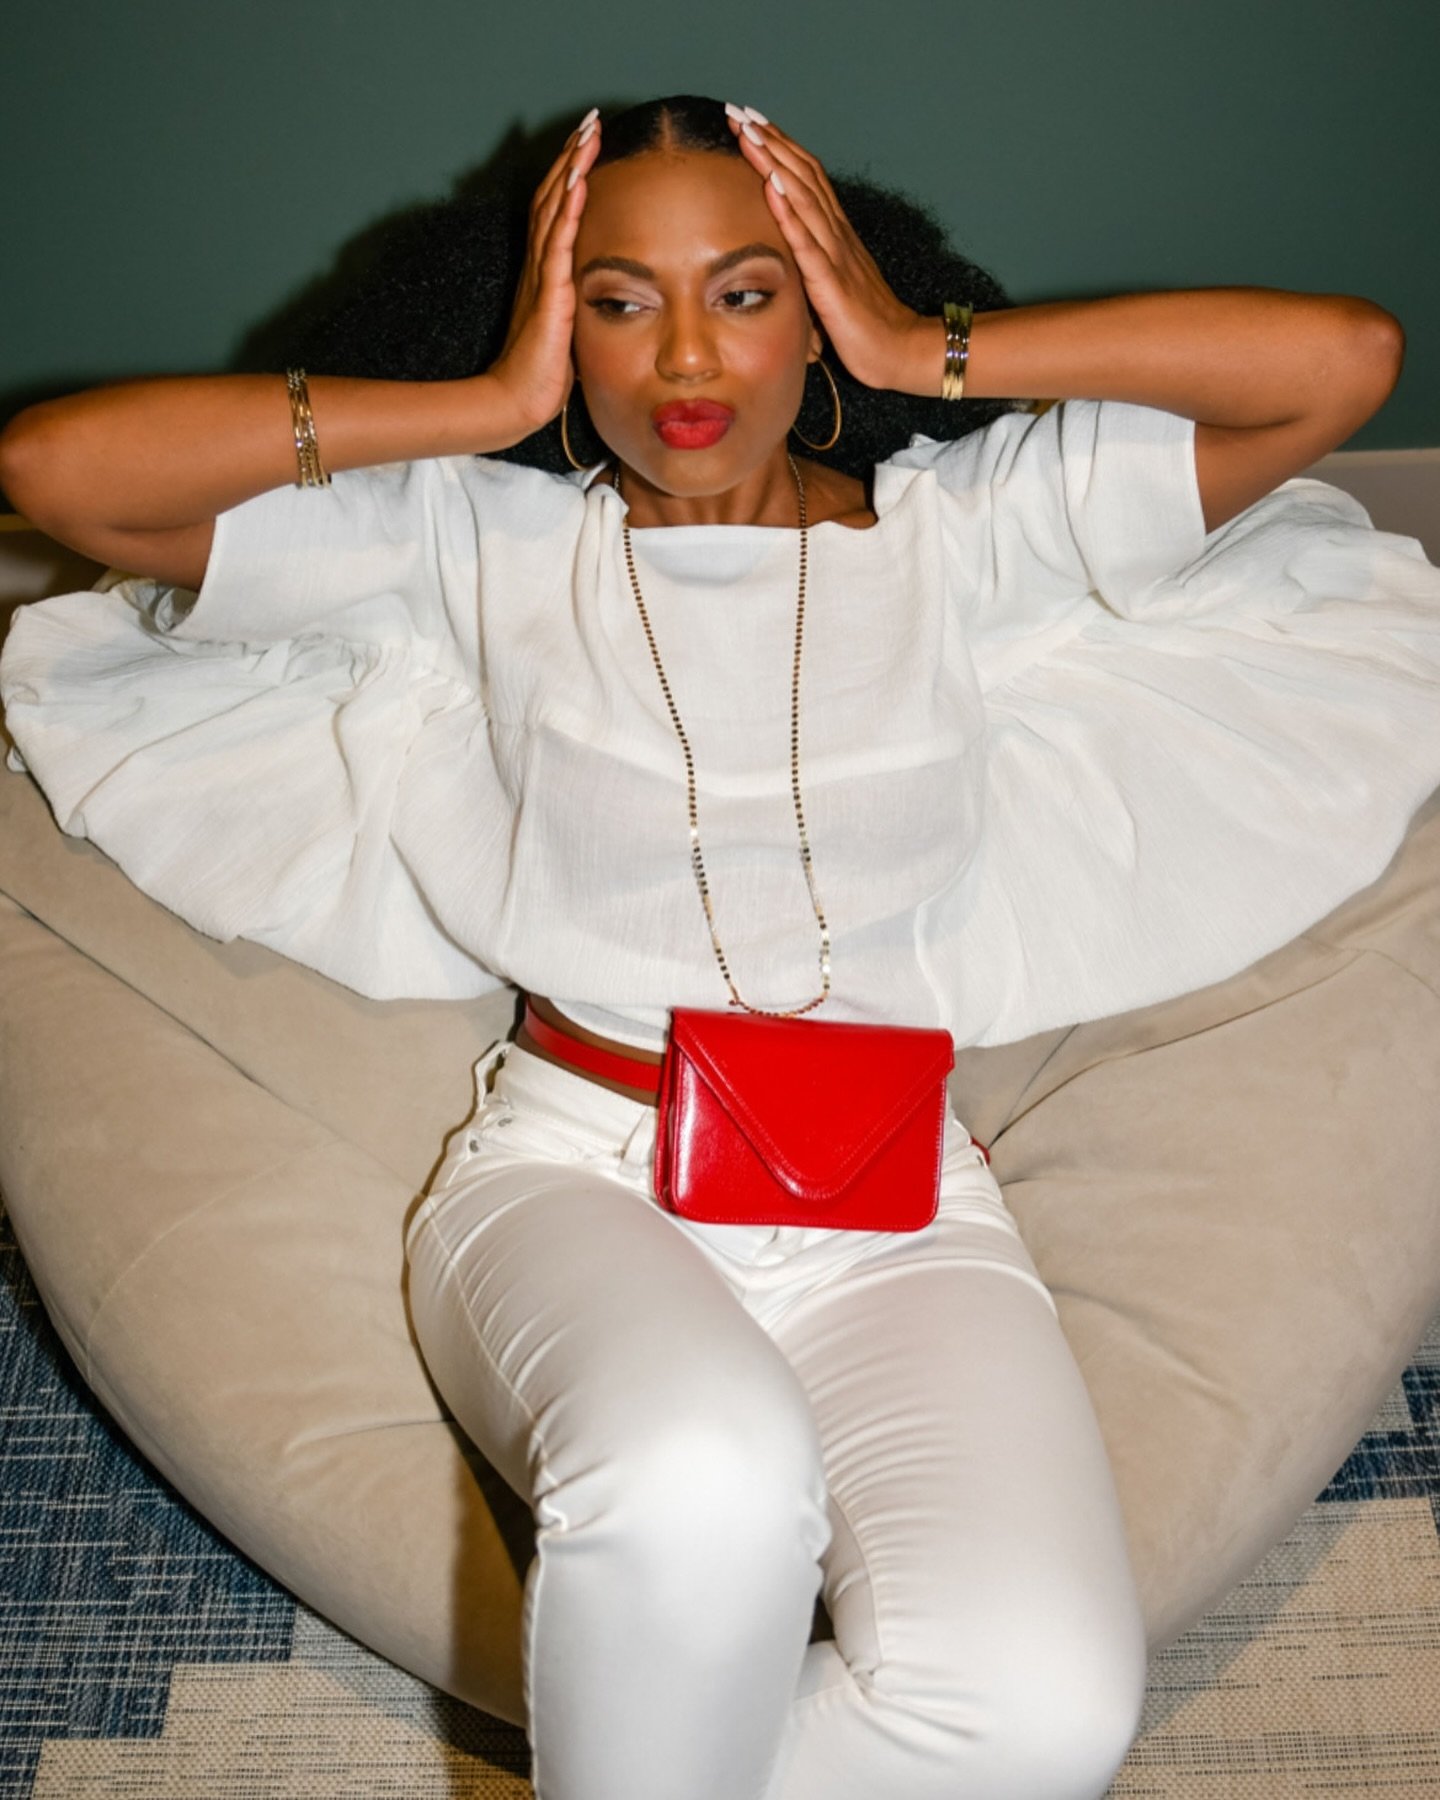 Summer Styling with Sadie (in red) #waistbag #readyforthesummer #redwaistbag #psherrodbags #leatherhandbags #leatherlifestyle #everydayperfect